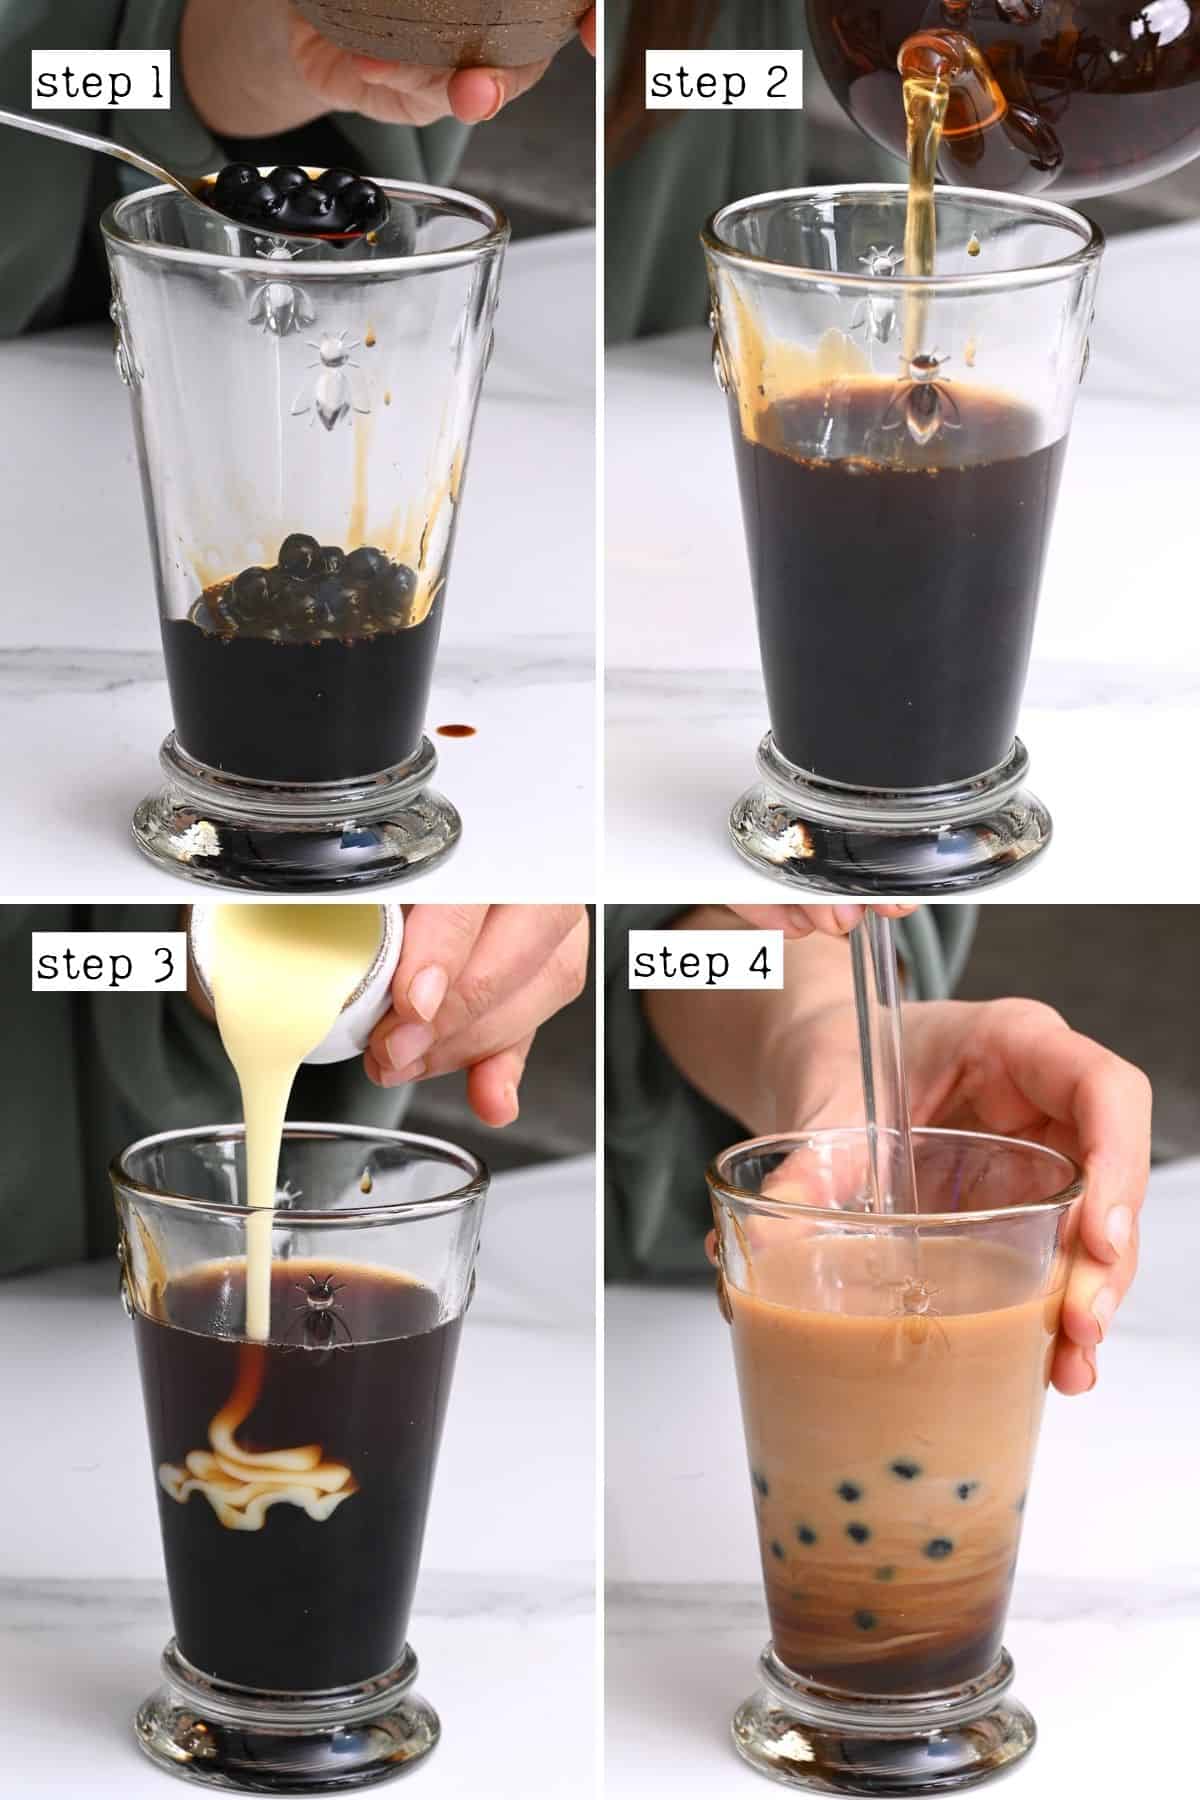 How To Make Bubble Tea